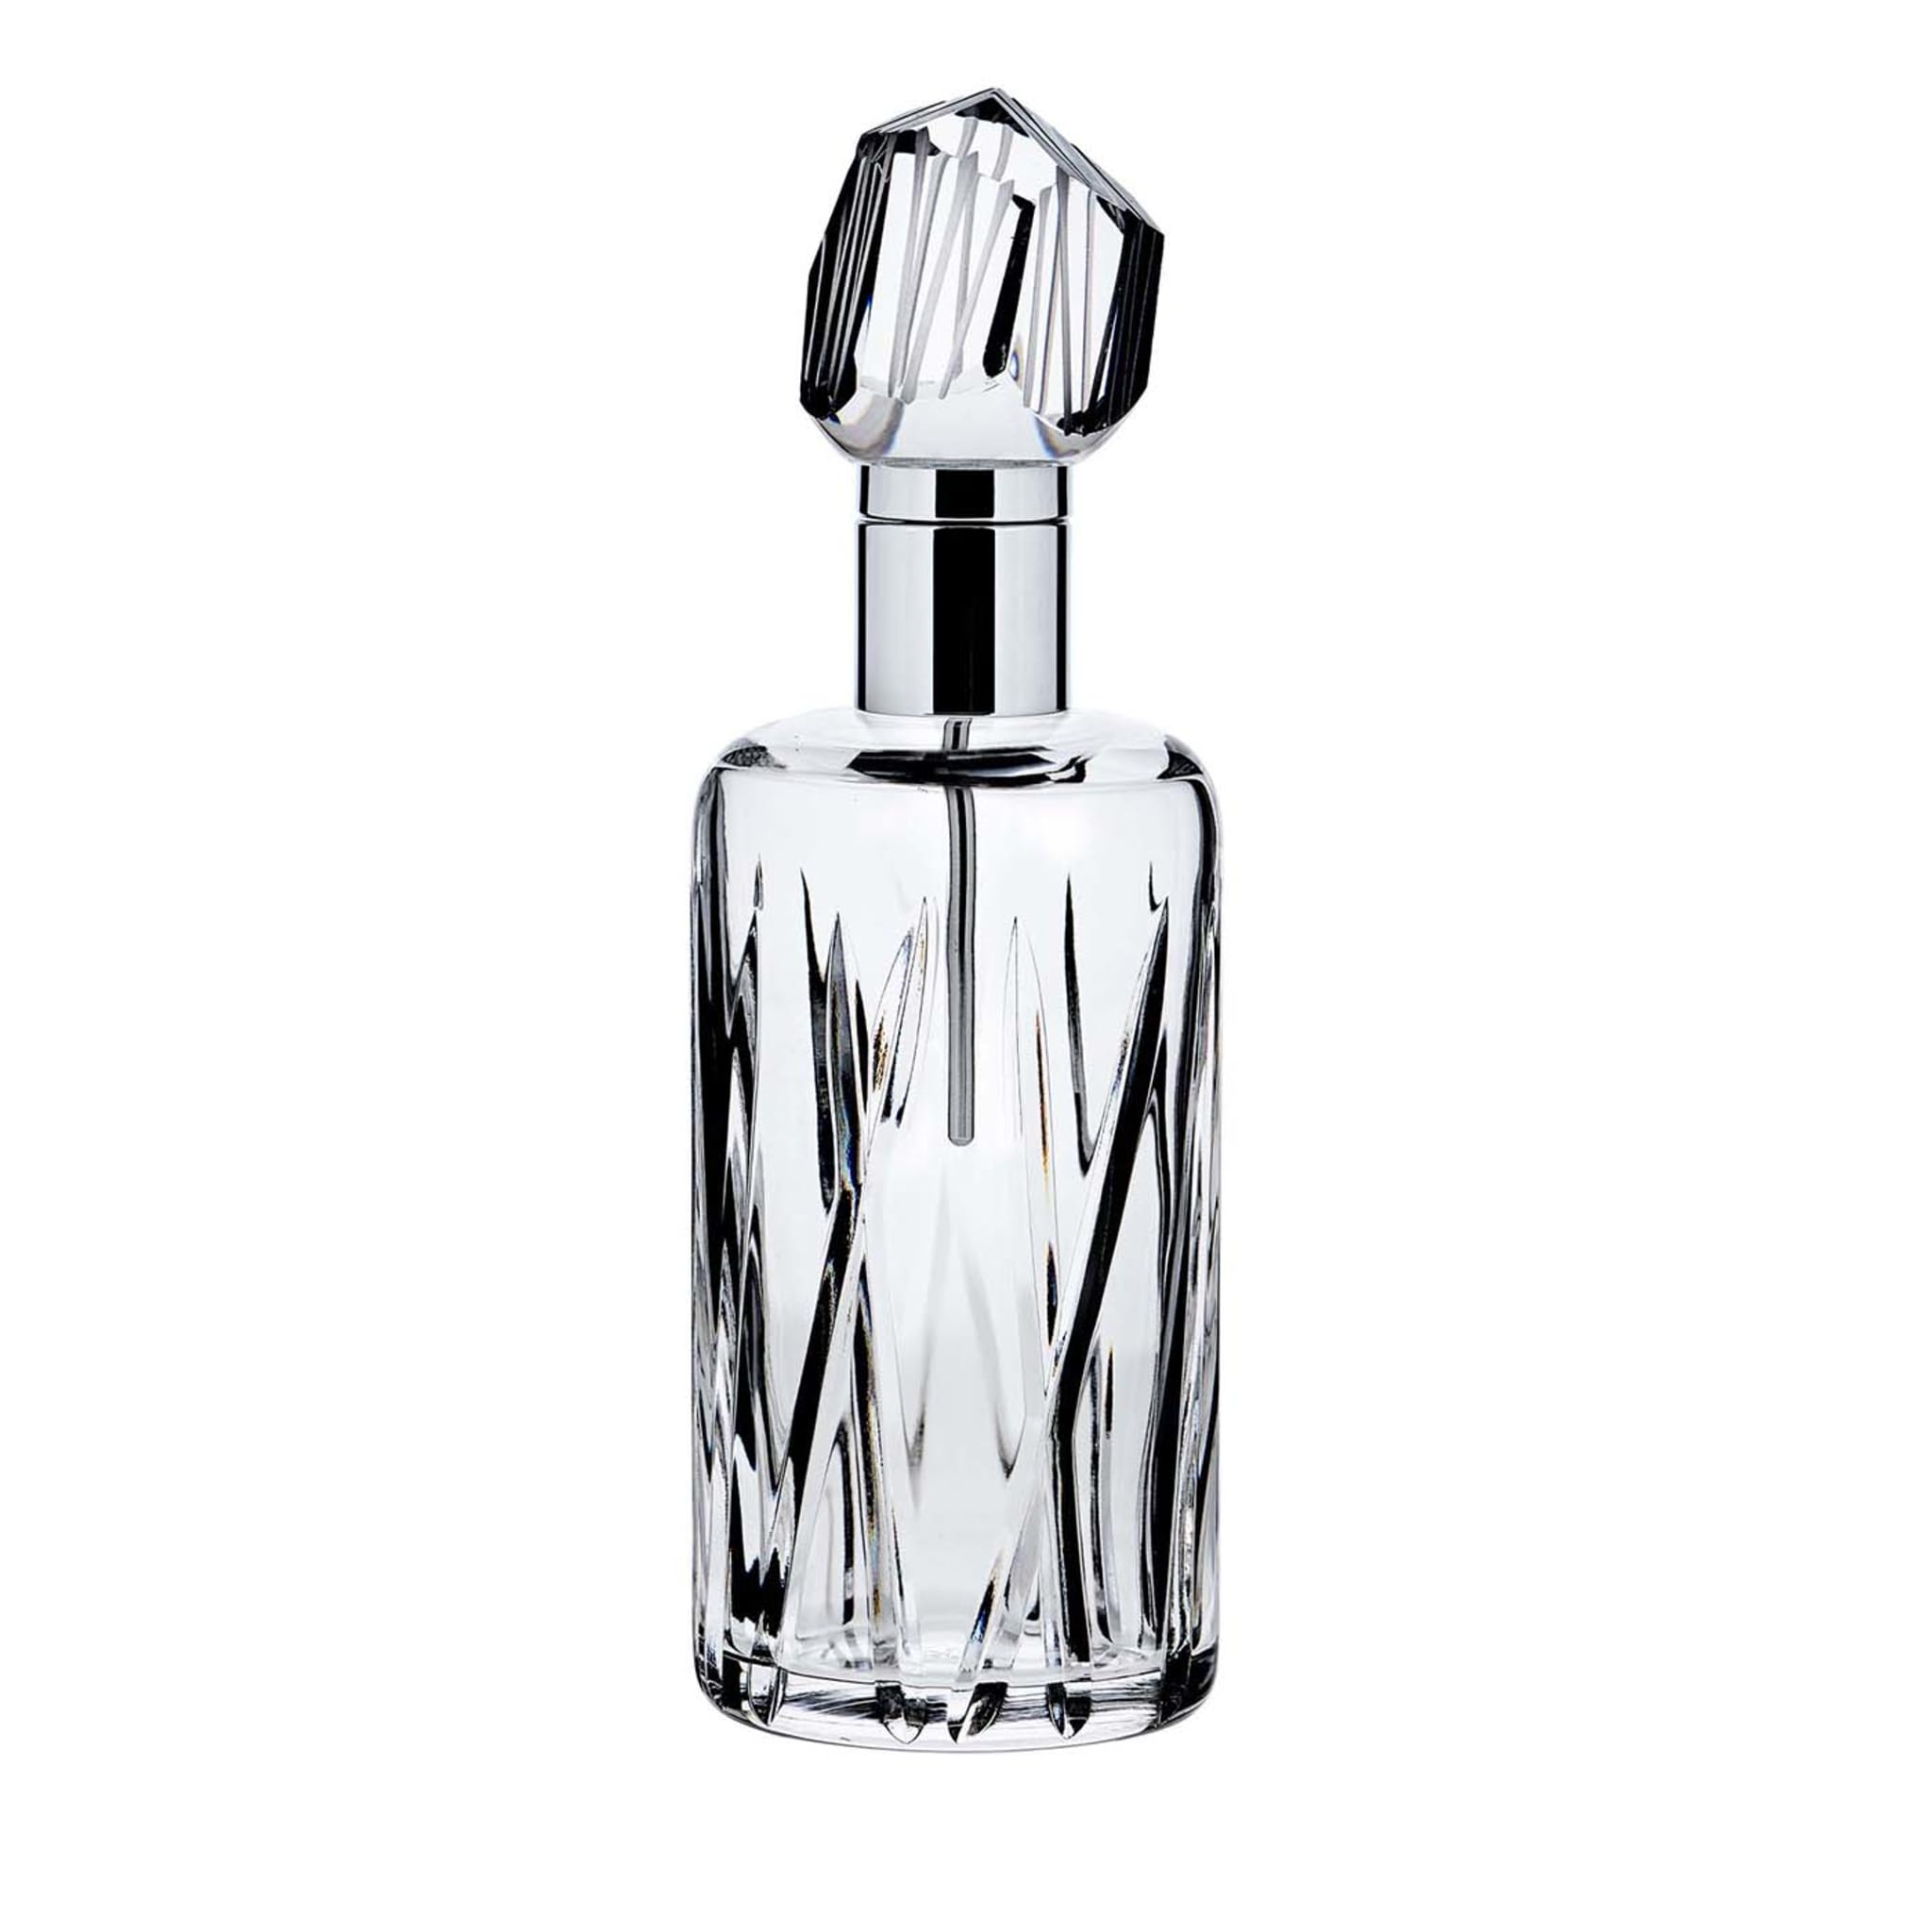 Cistus perfume bottle with amethyst flower Mario Cioni & C